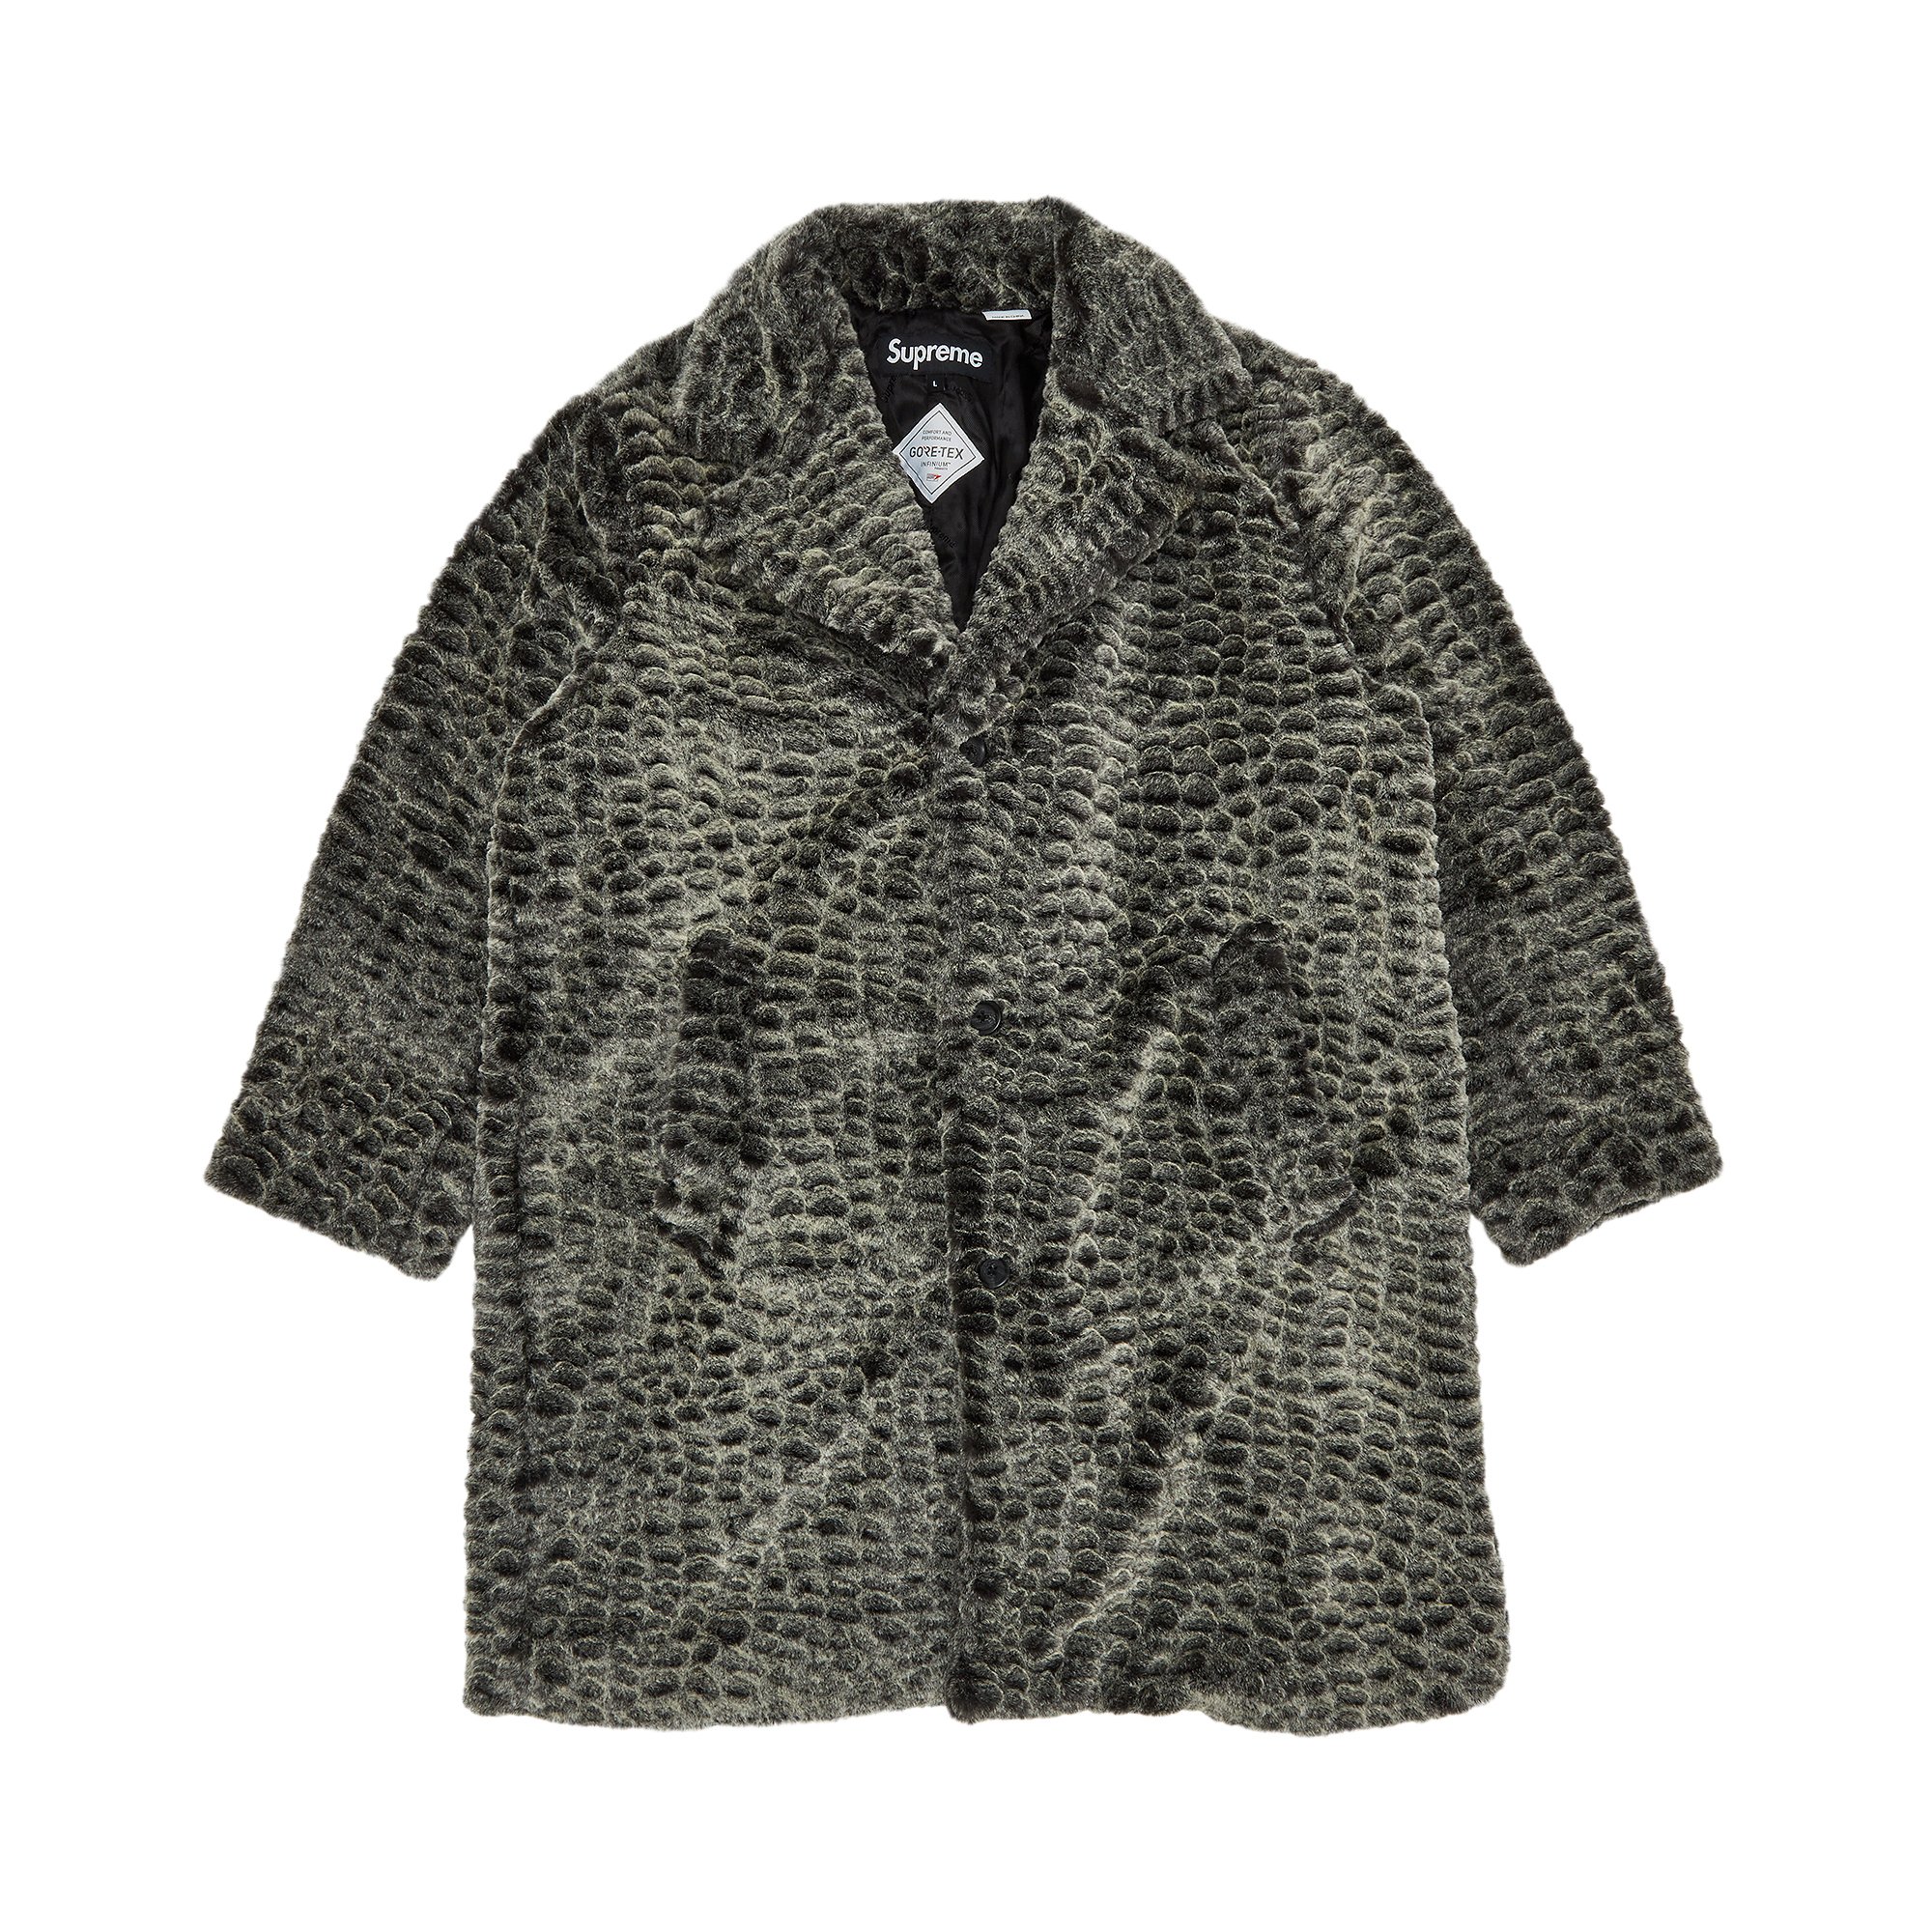 Supreme Croc Faux Fur Overcoat 'Black'